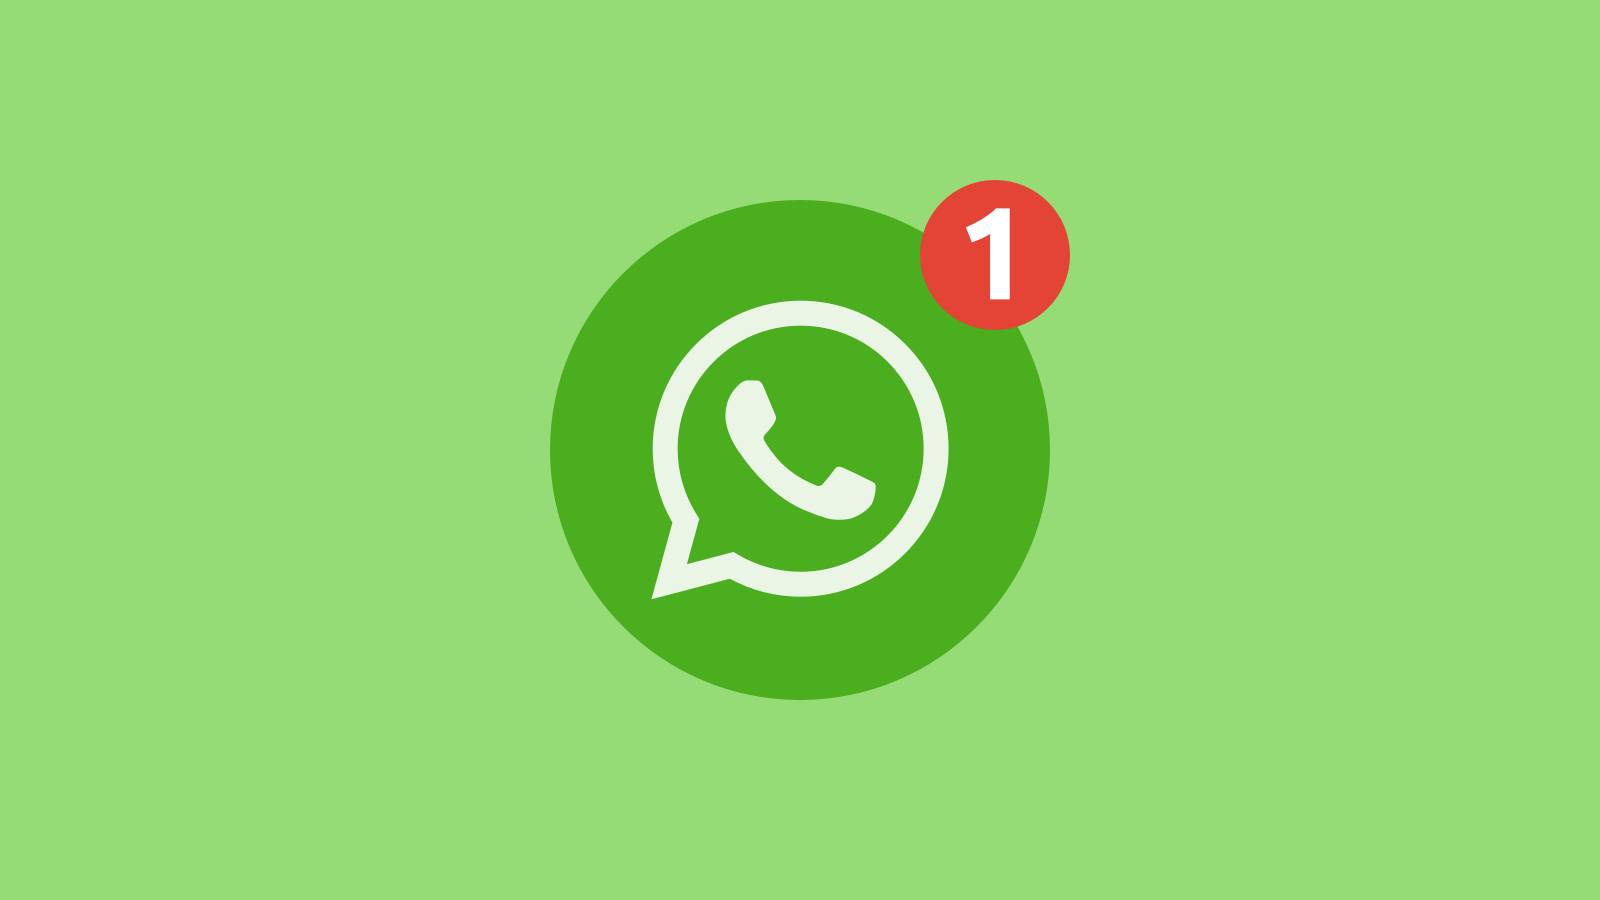 La ingenuidad de WhatsApp